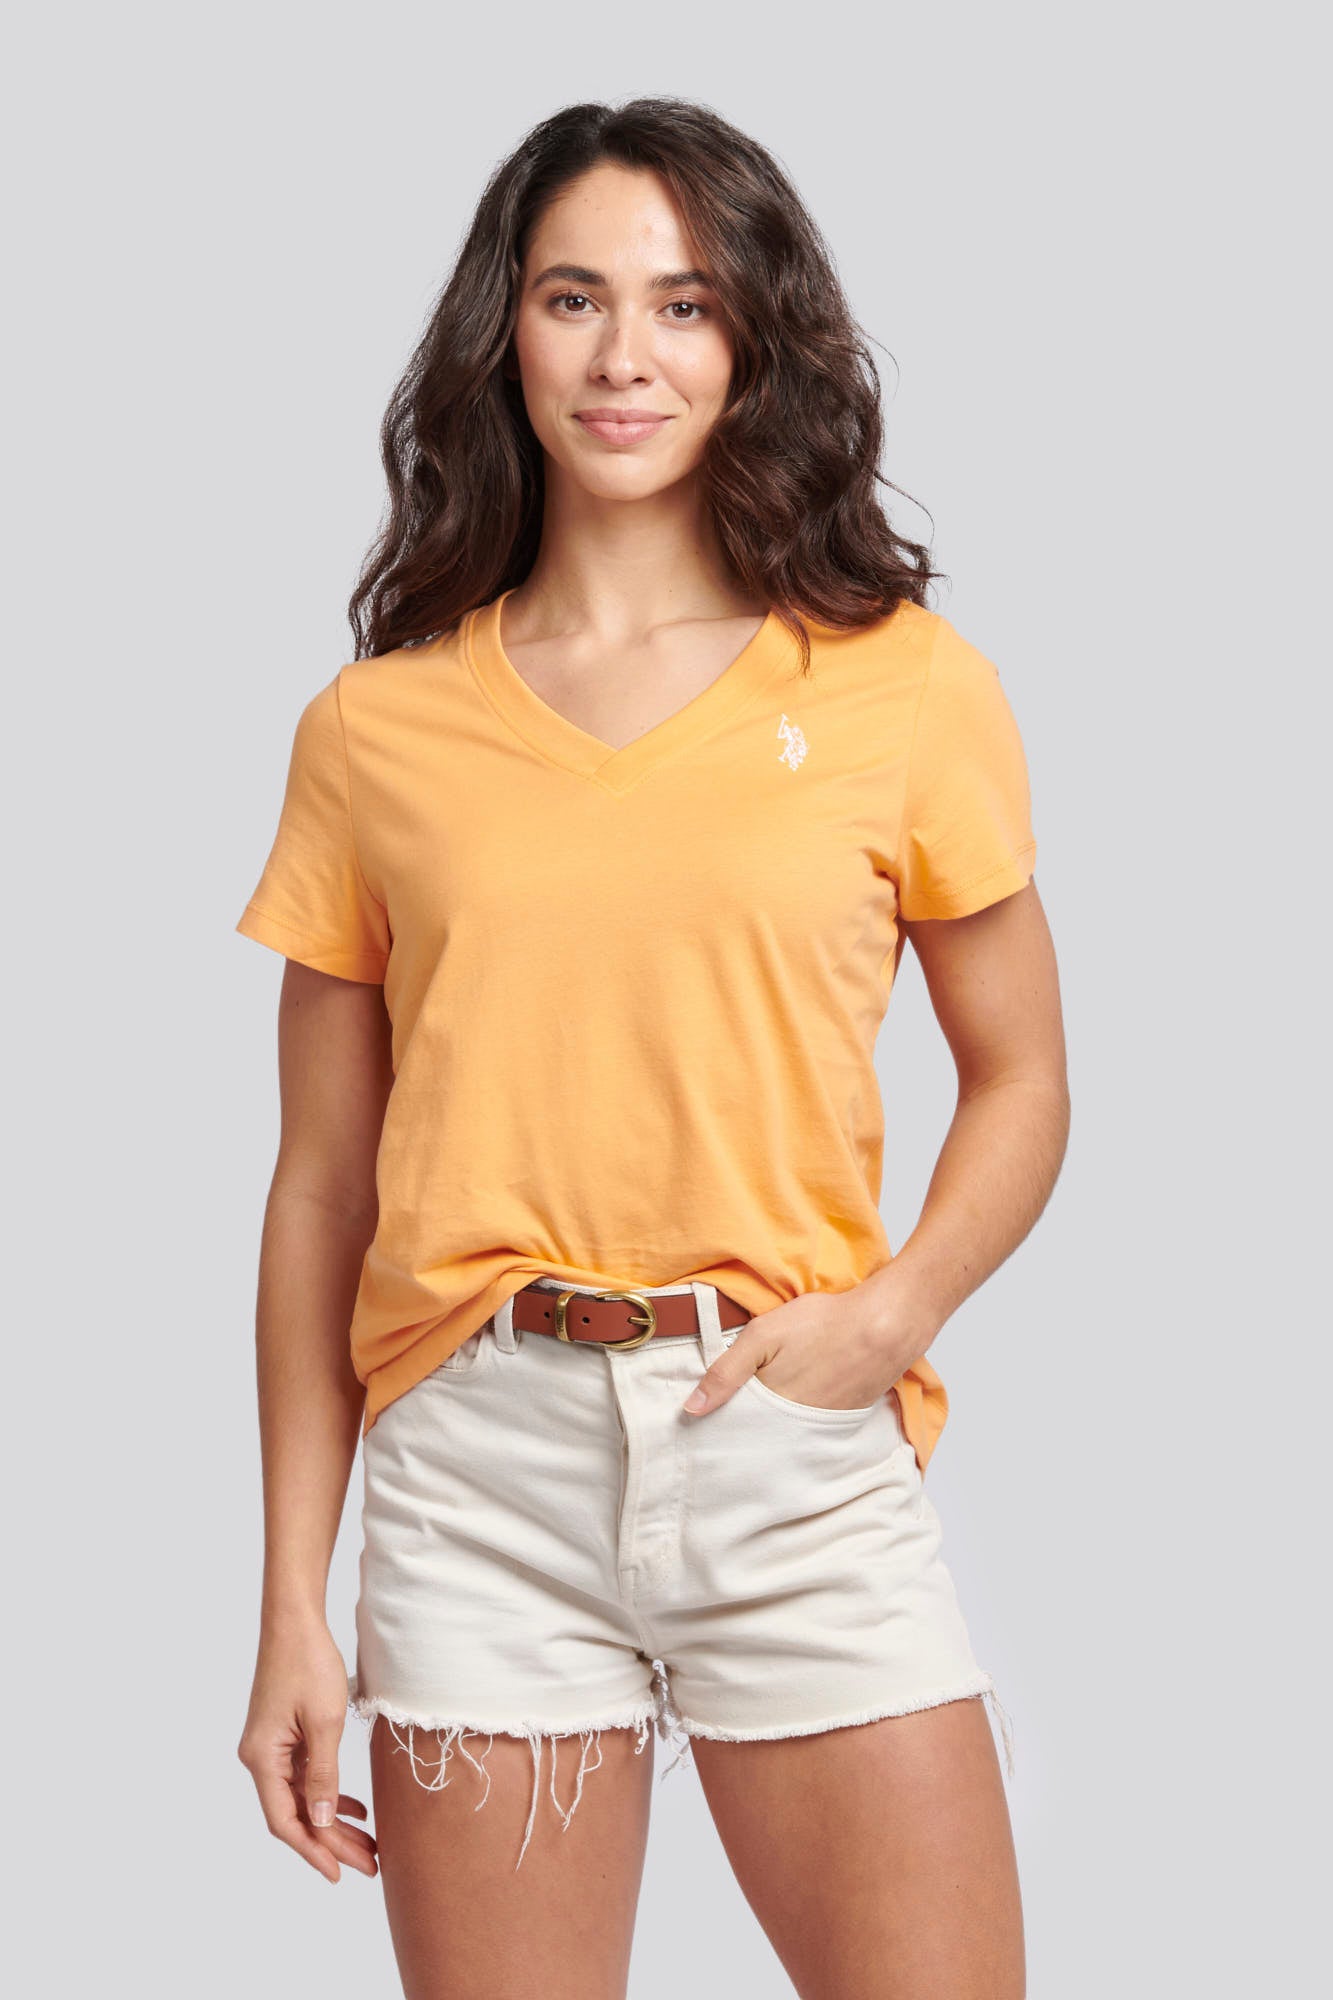 U.S. Polo Assn. Womens V-Neck T-Shirt in Mock Orange